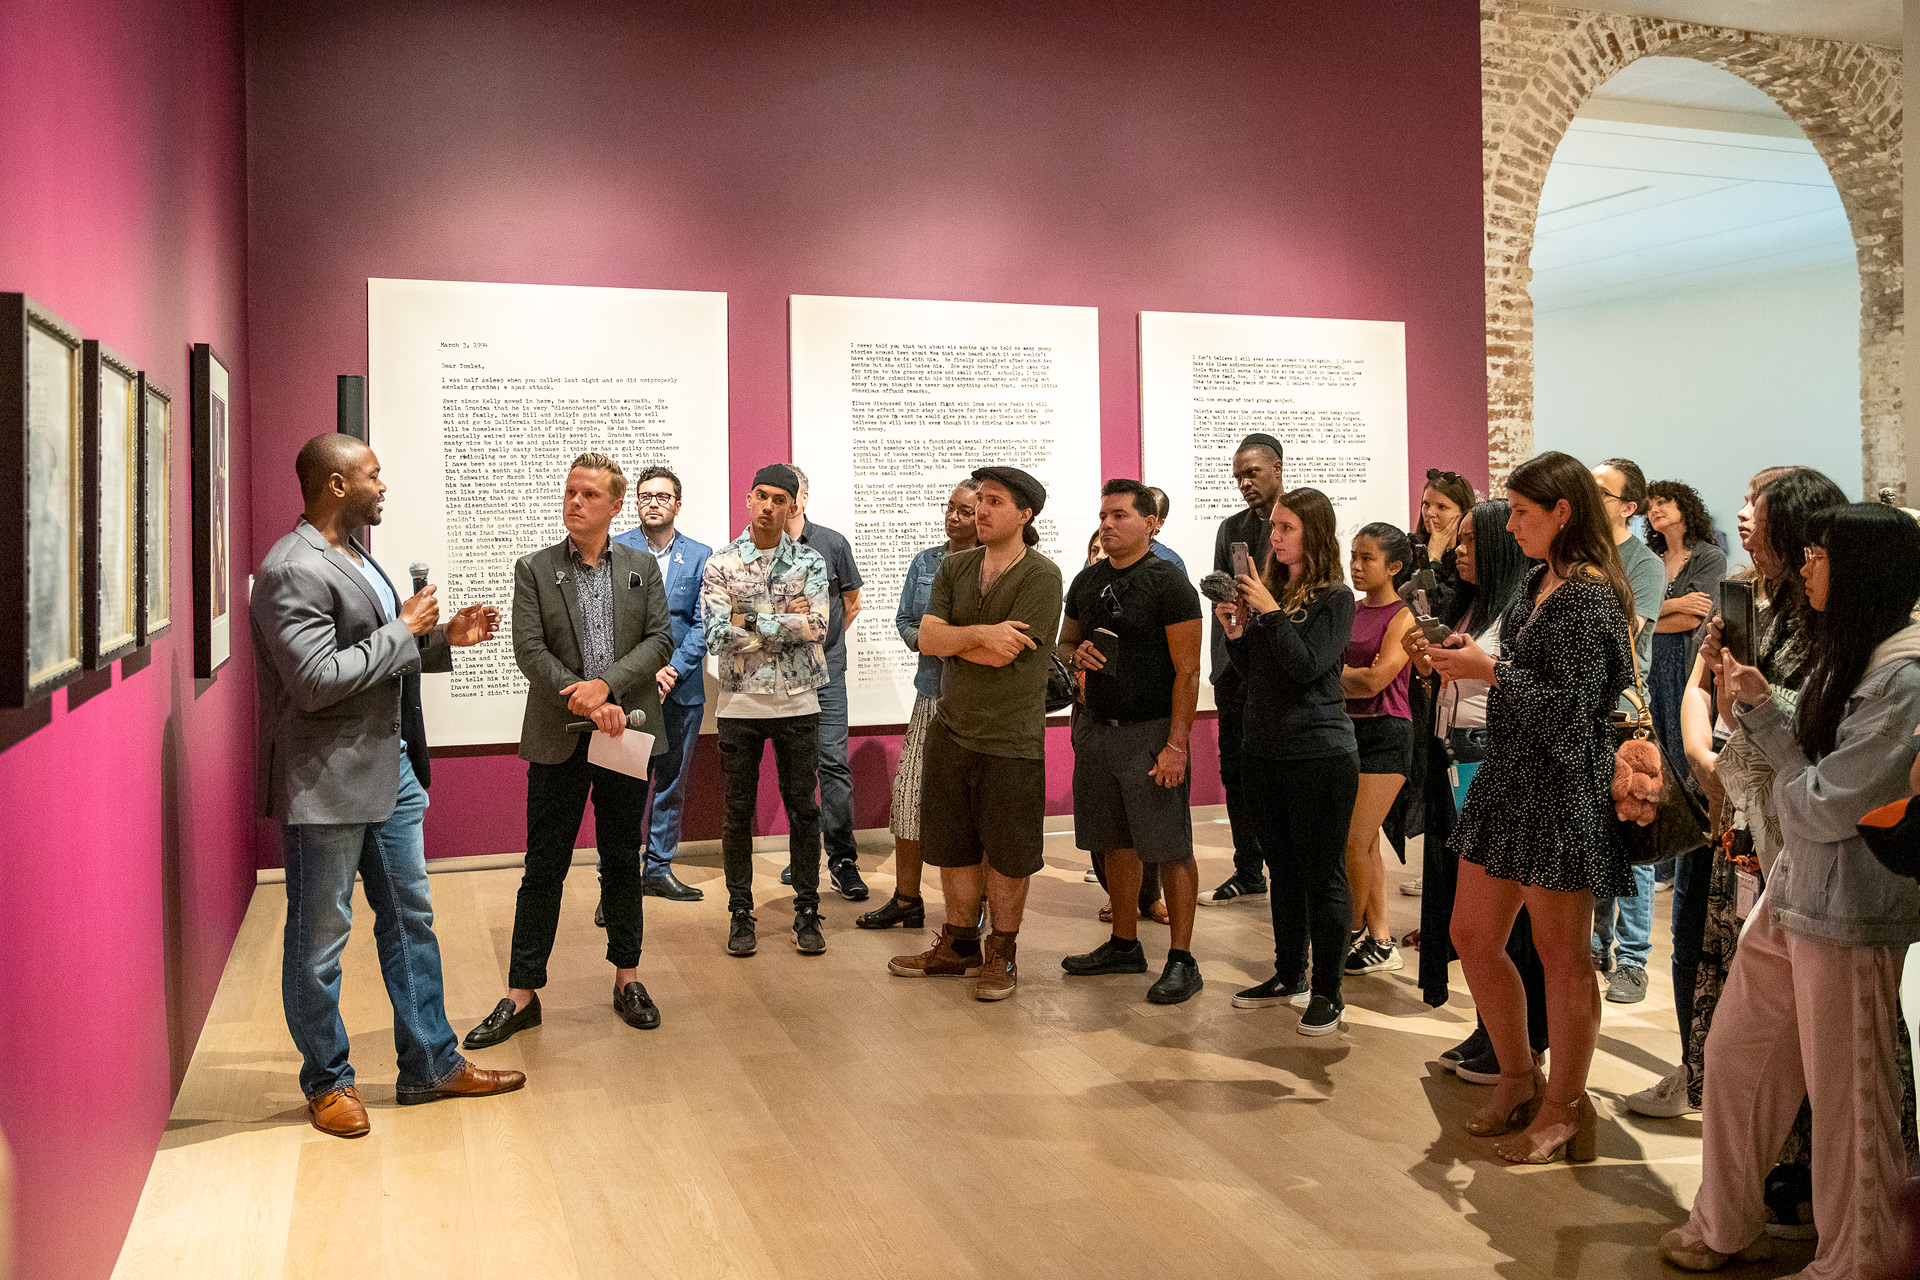 Frederick Douglass gallery talk, Evans Center